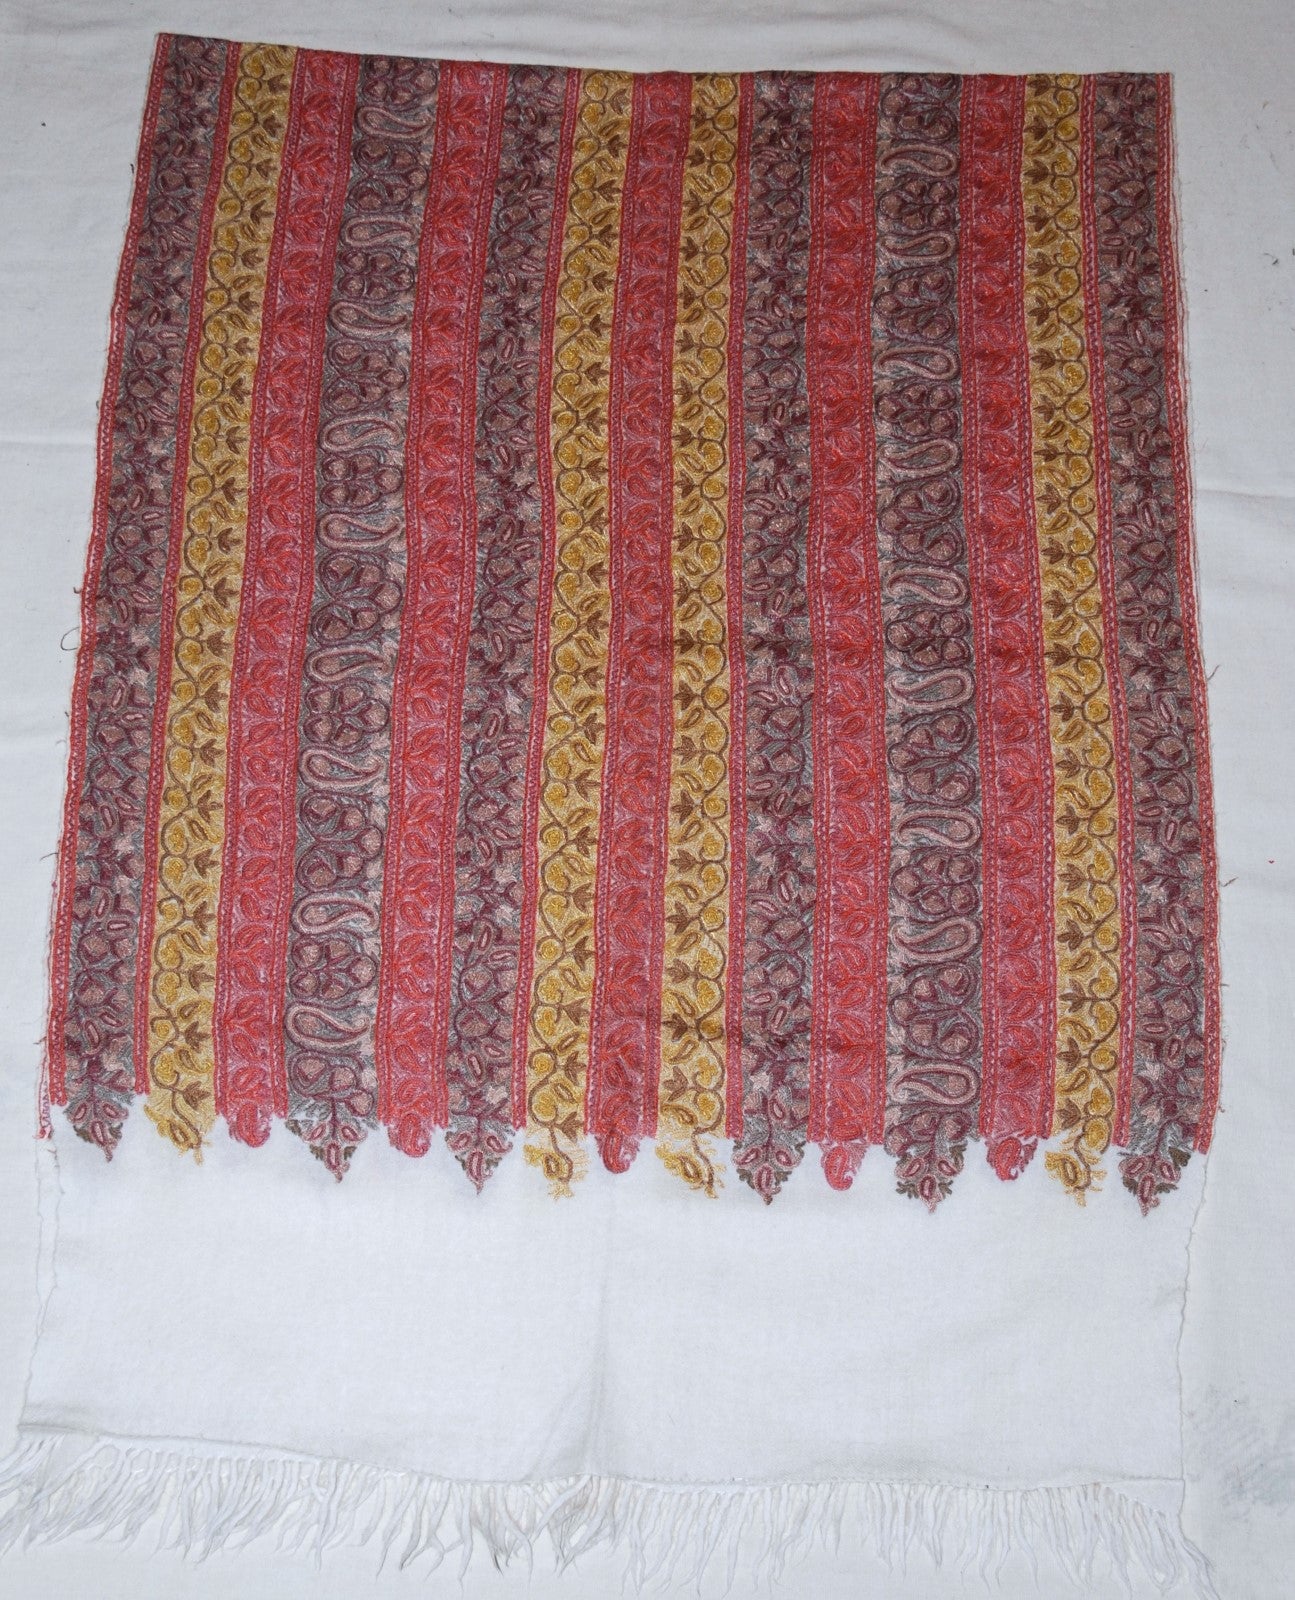 Kashmir Woolen Shawl Wrap Throw Off White, Multicolor "Jamawar" Embroidery #WS-112